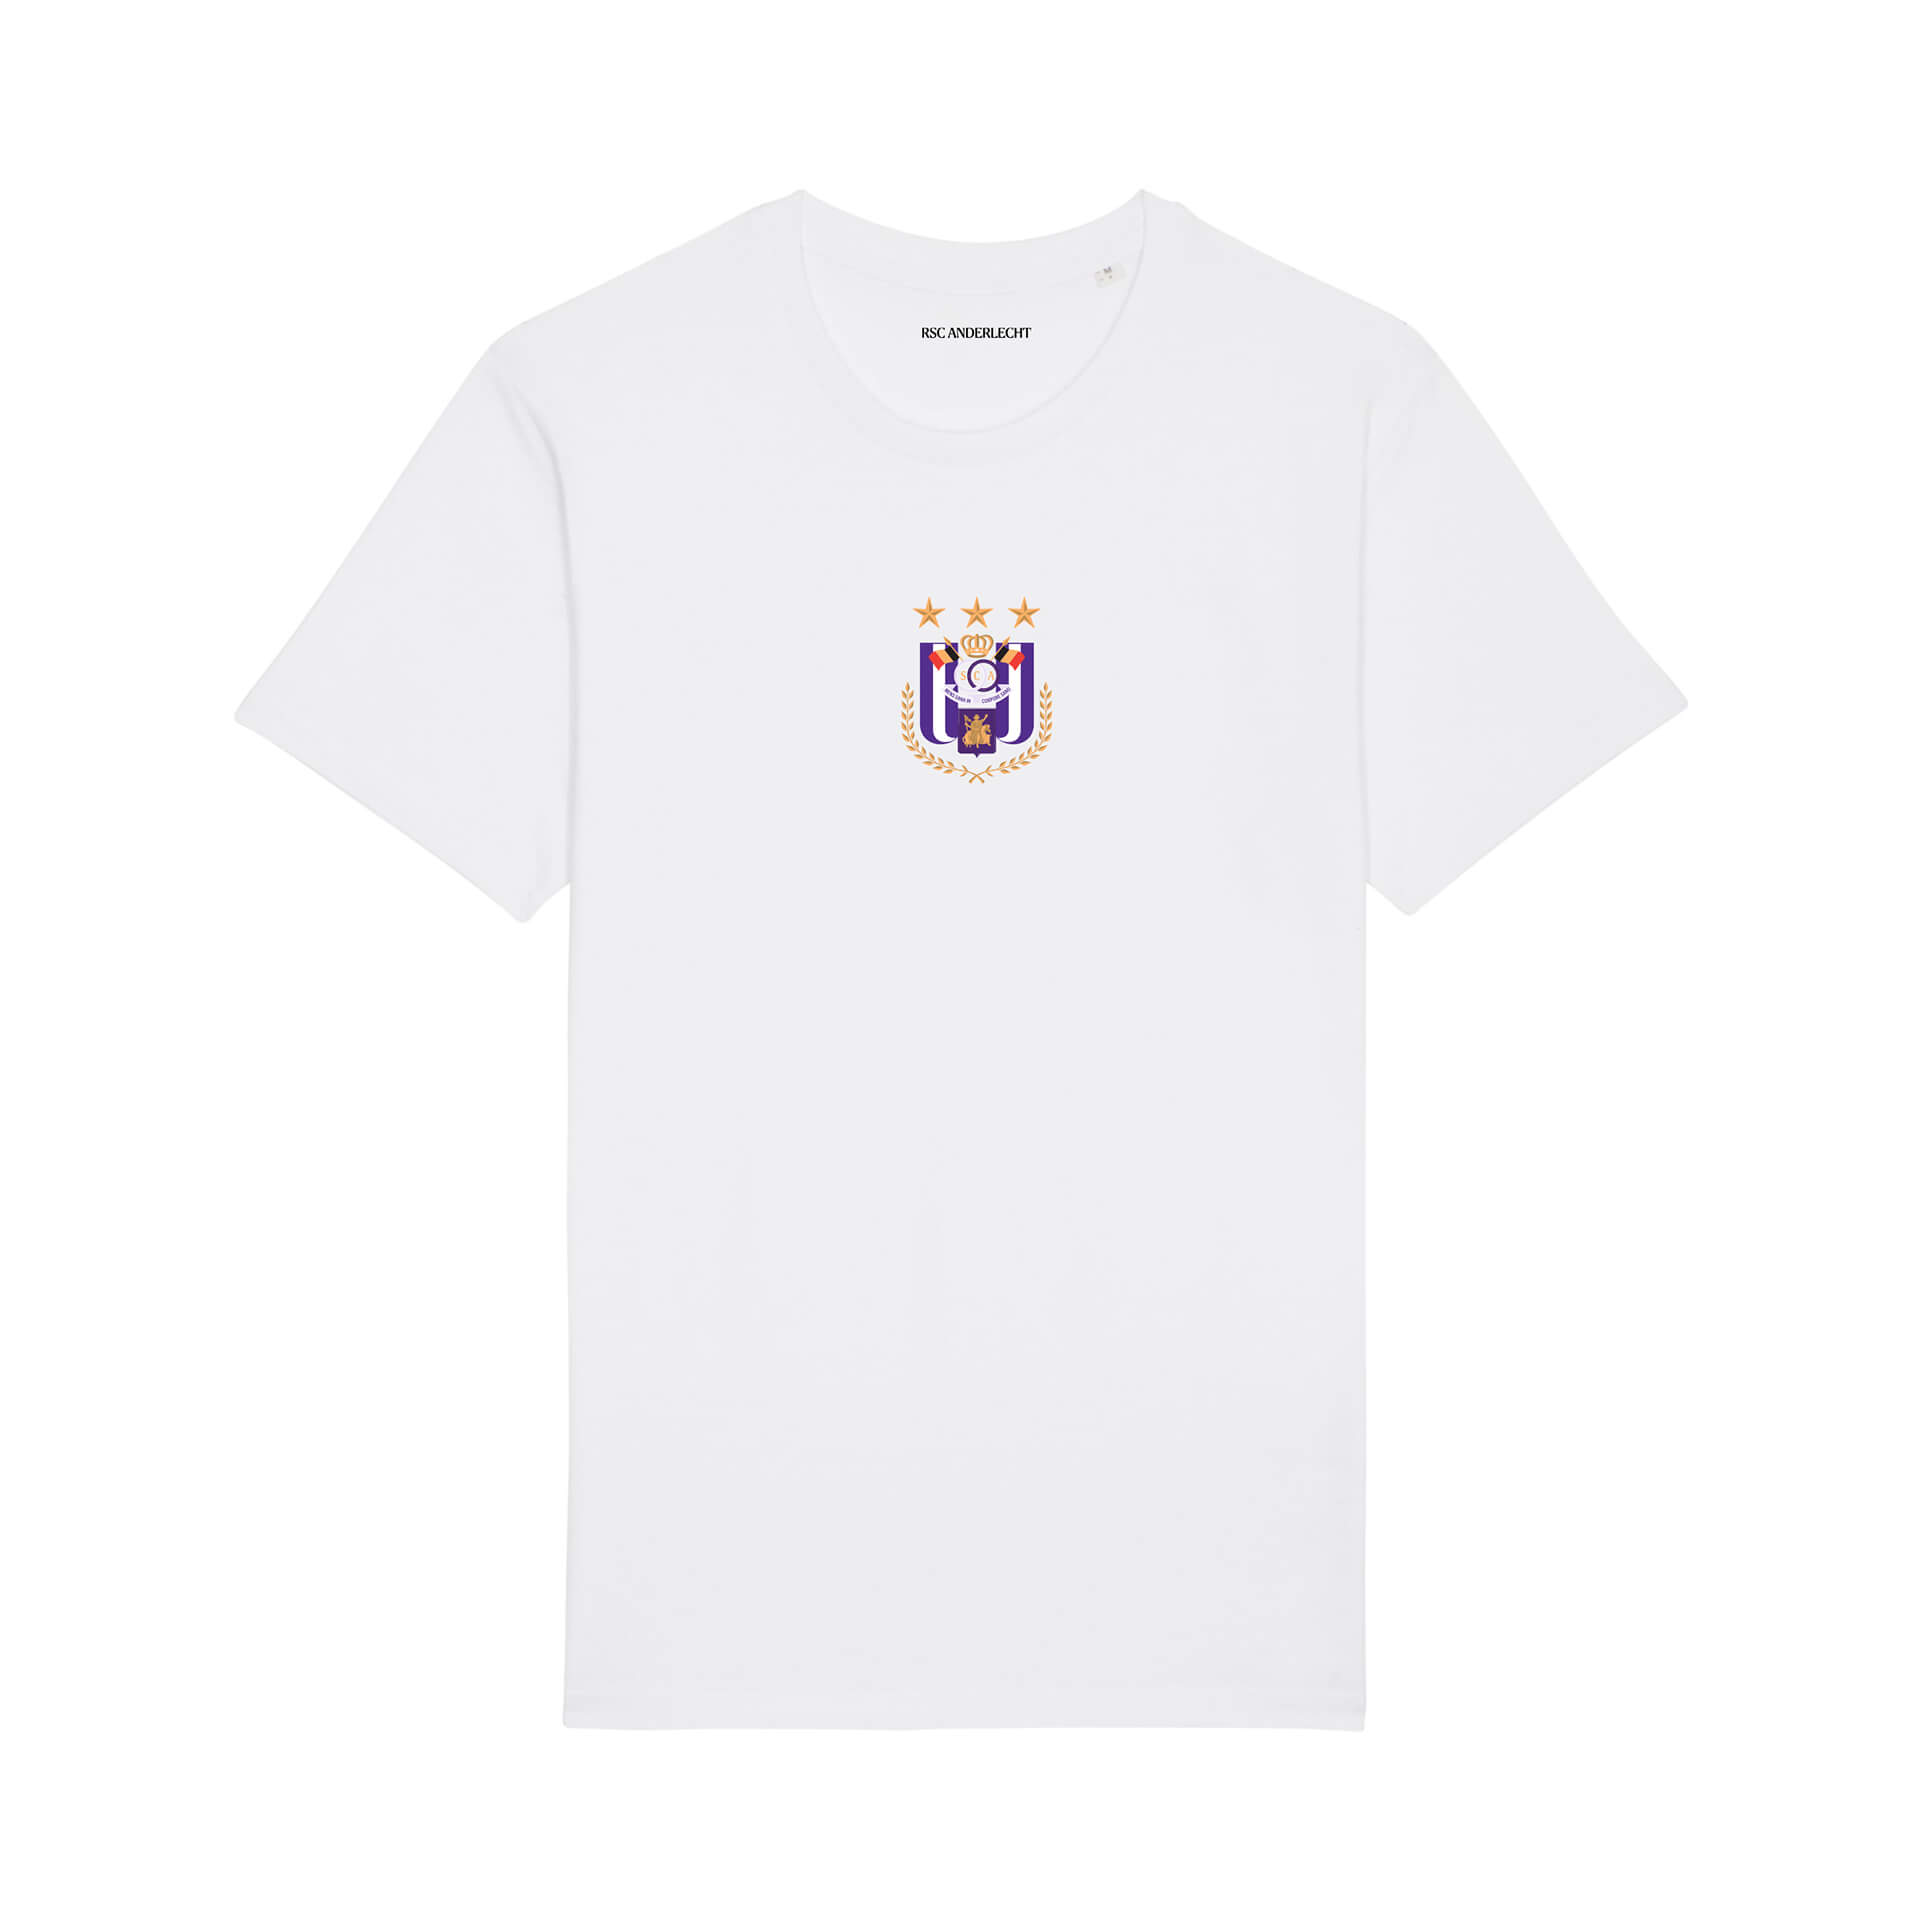 T-shirt white classic logo